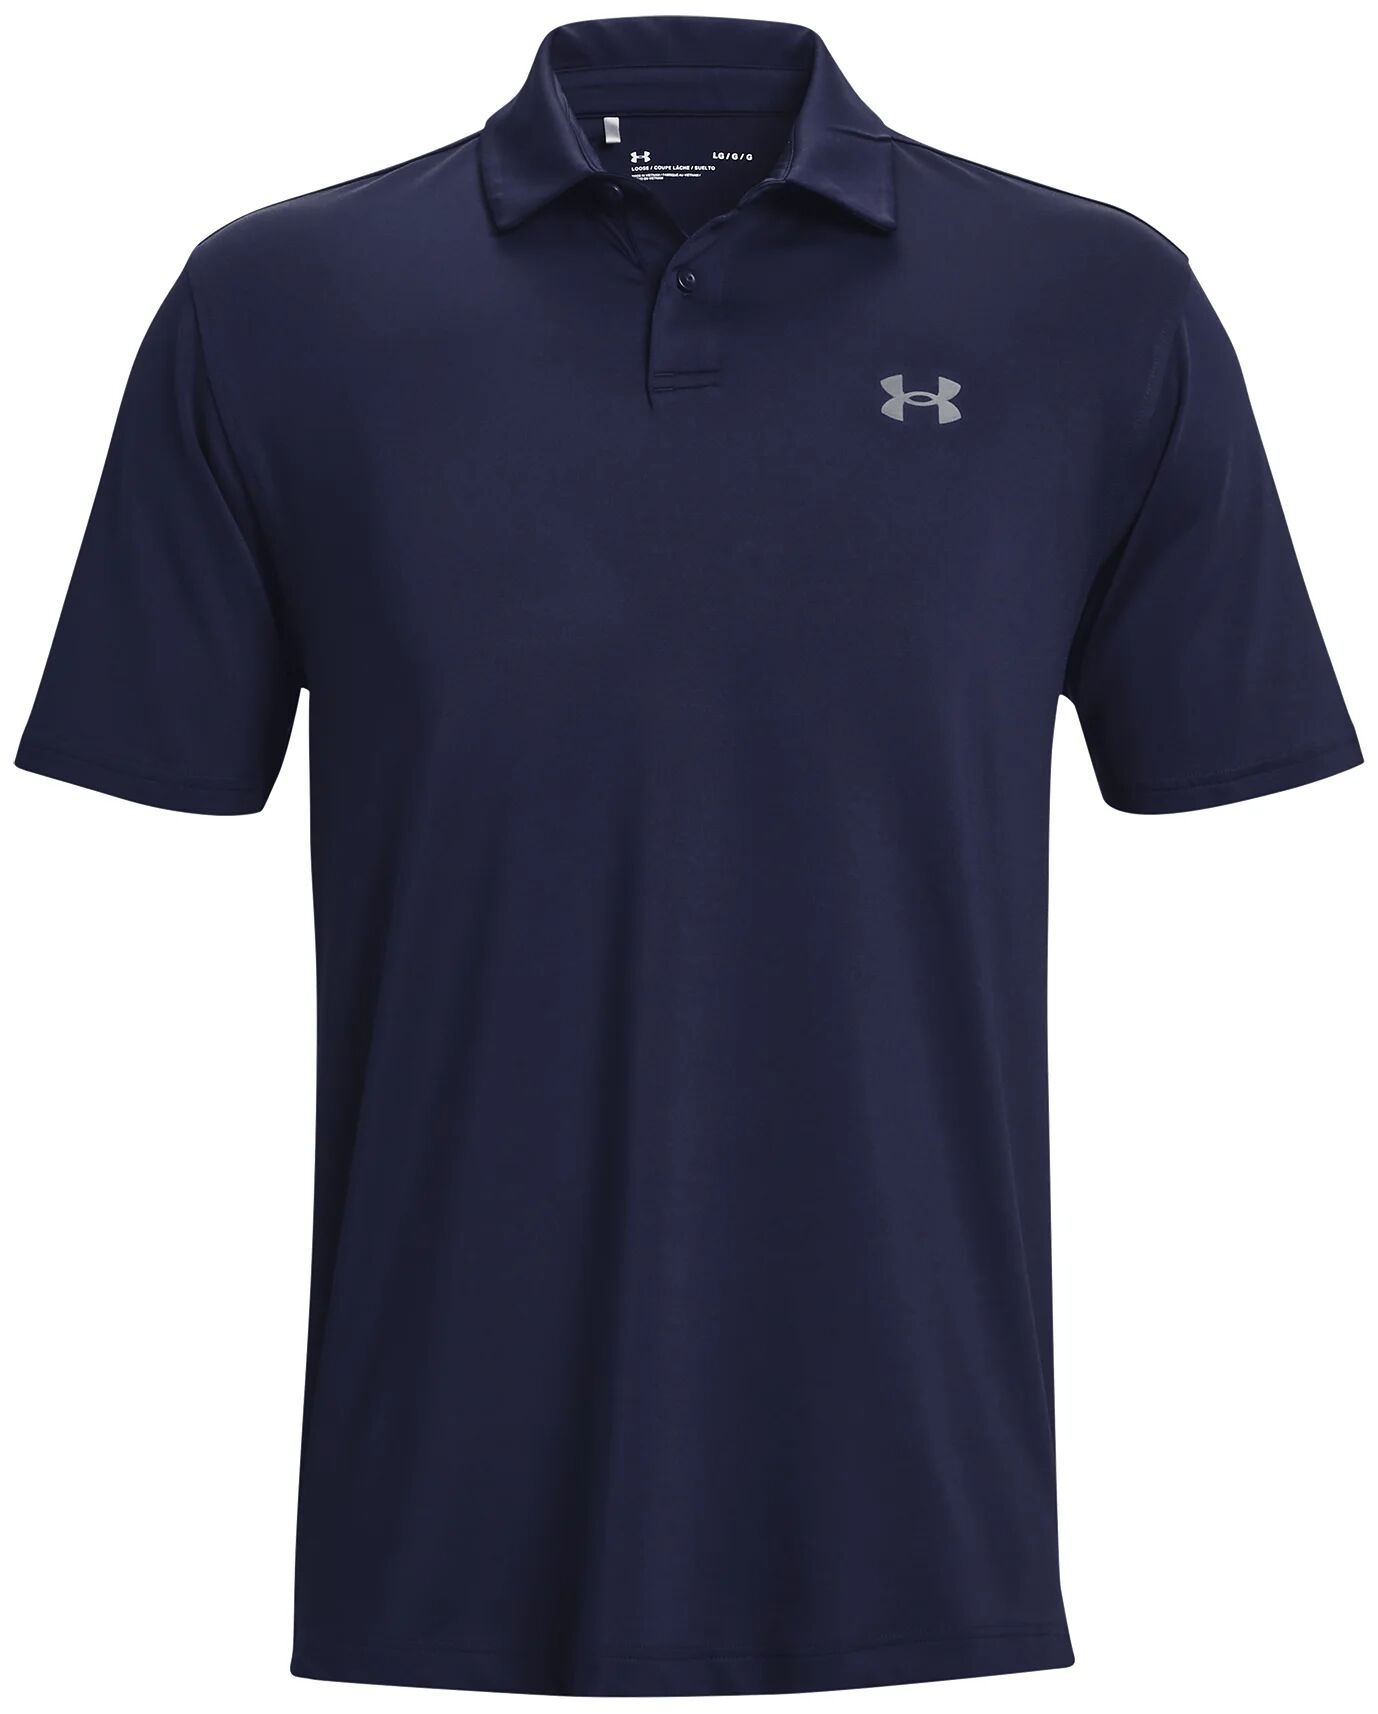 Under Armour T2G Men's Golf Polo Shirt - Blue, Size: Medium